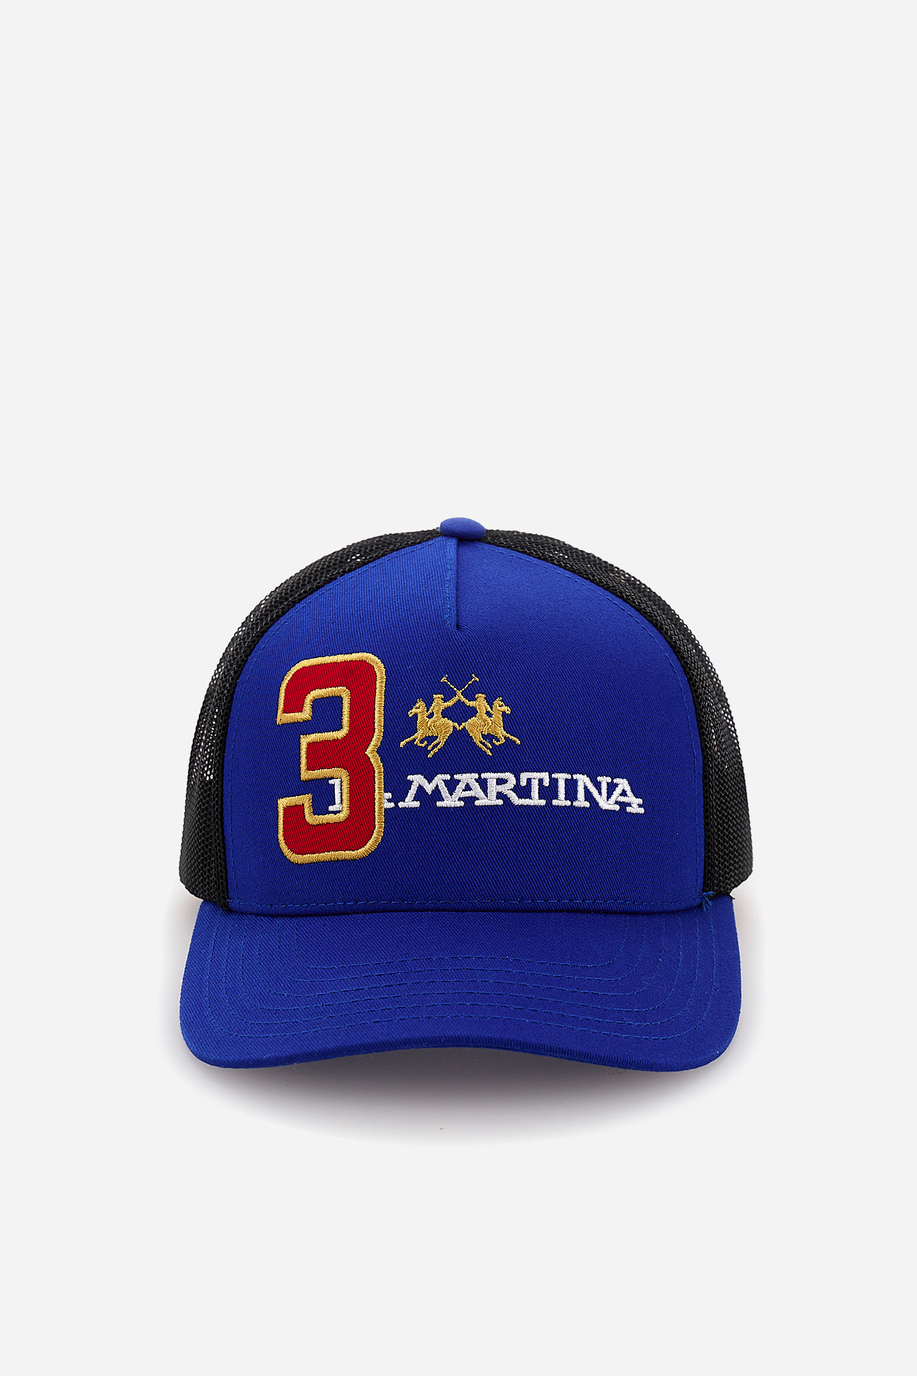 Cotton baseball hat -  Verine - Hats | La Martina - Official Online Shop